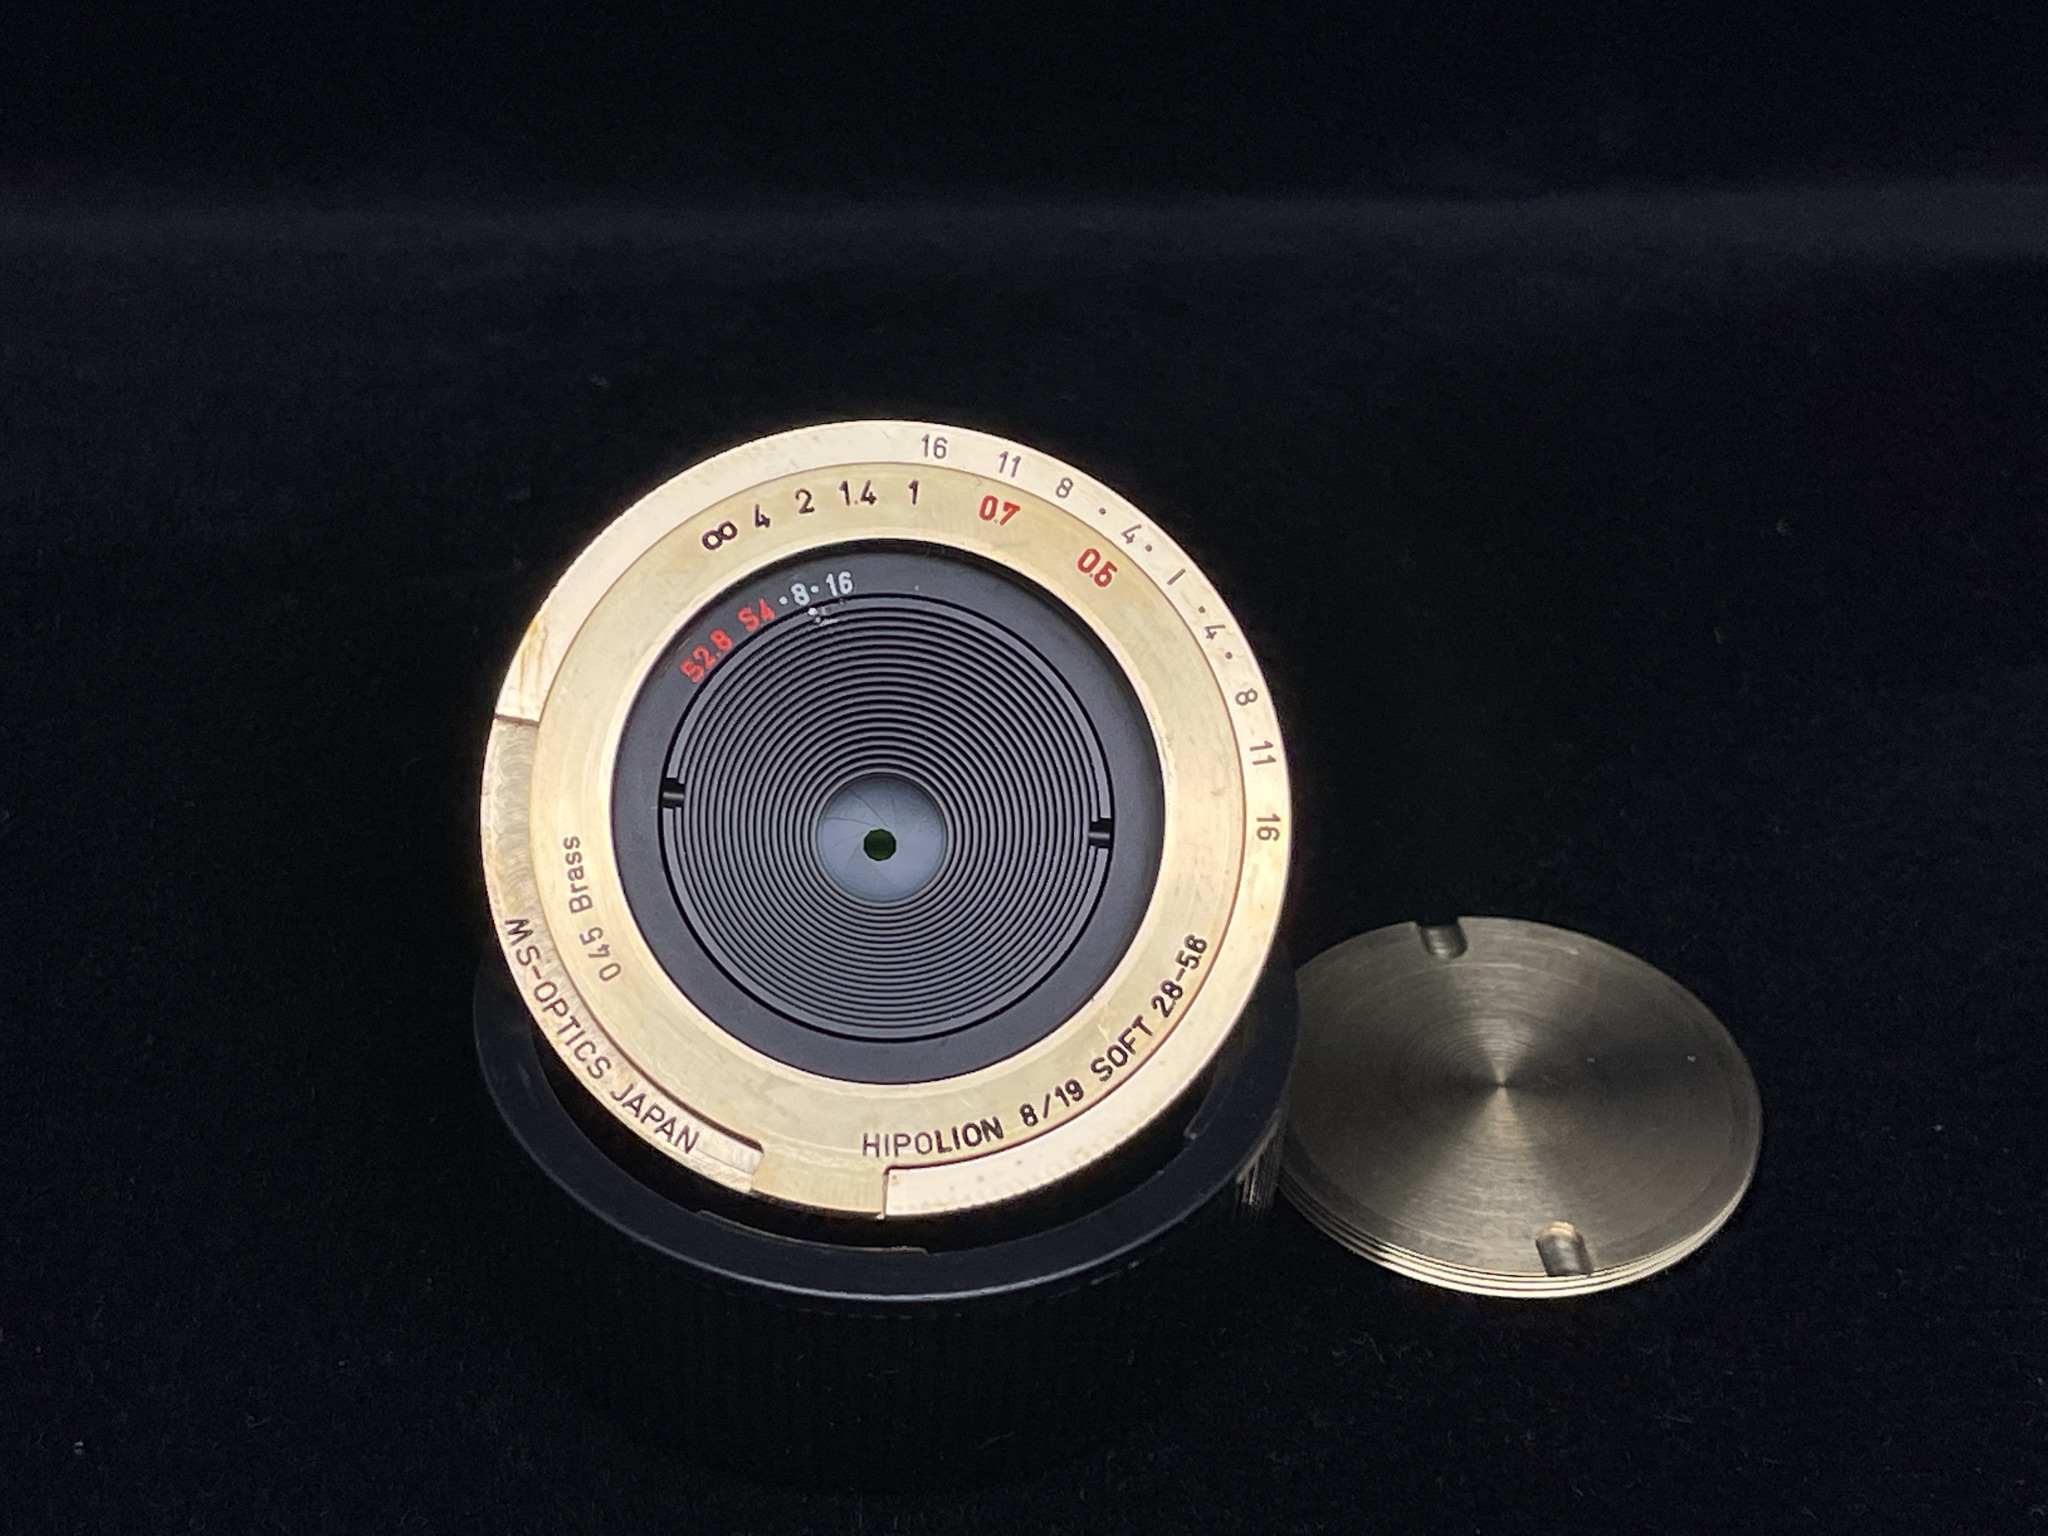 MS Optics Hipolion 8-16/19 M mount (Brass) – SH Cameras Co Ltd